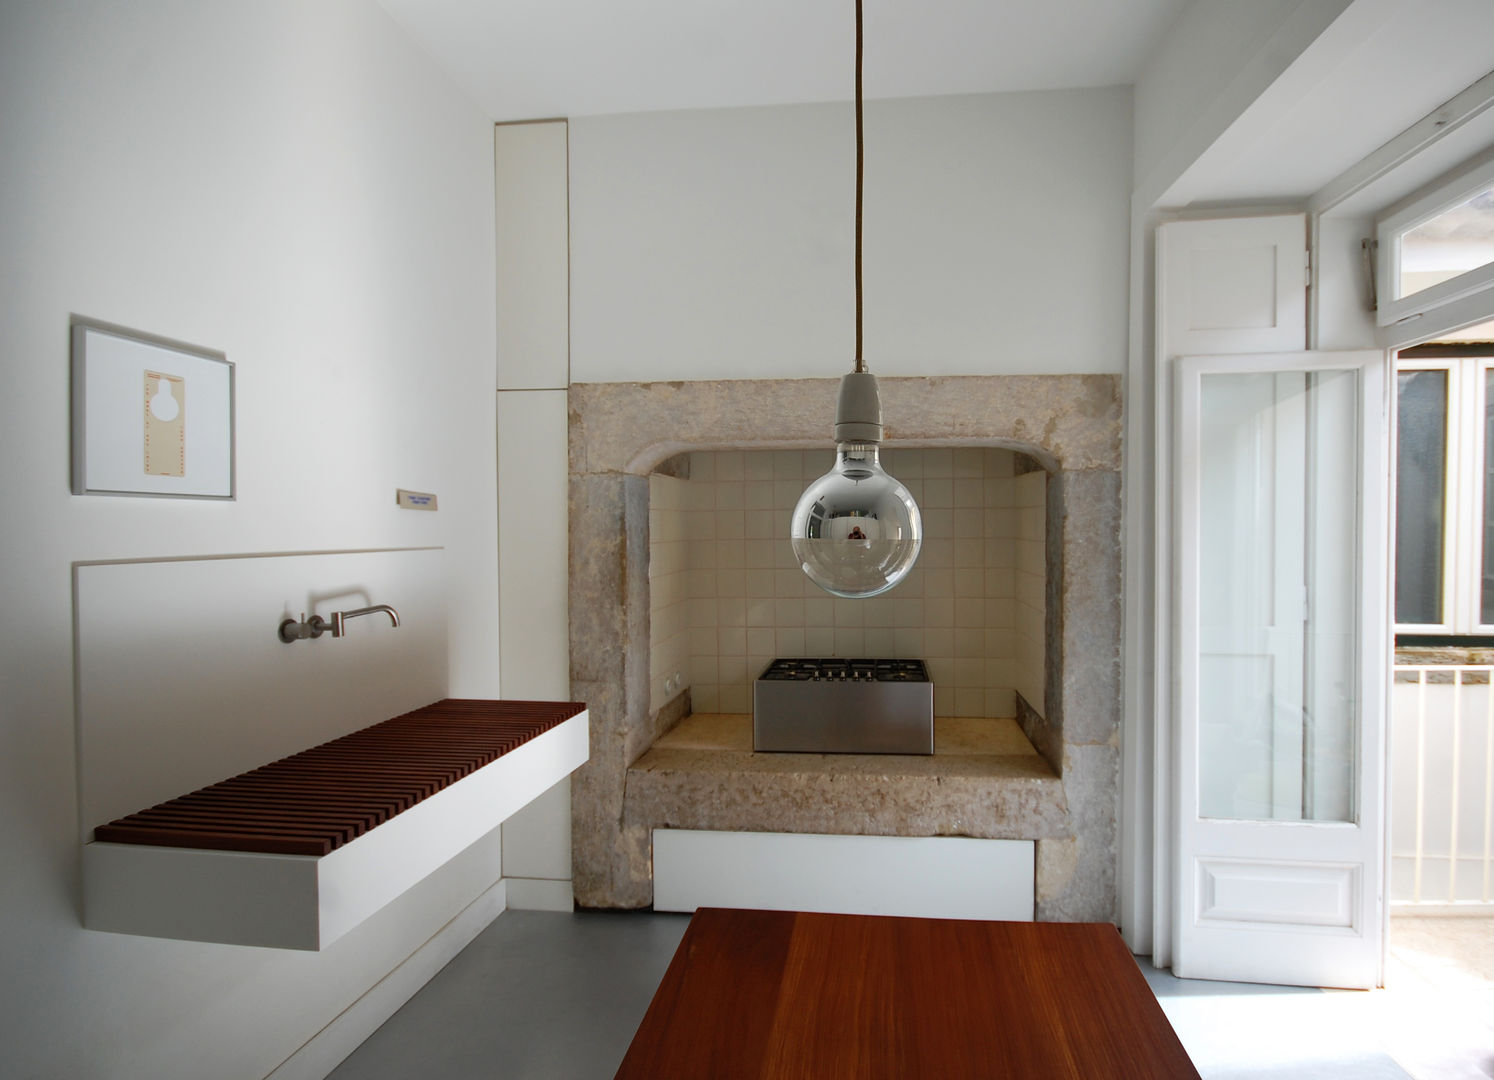 Apartamento Pedras Negras (2012), pedro pacheco arquitectos pedro pacheco arquitectos Cocinas de estilo minimalista